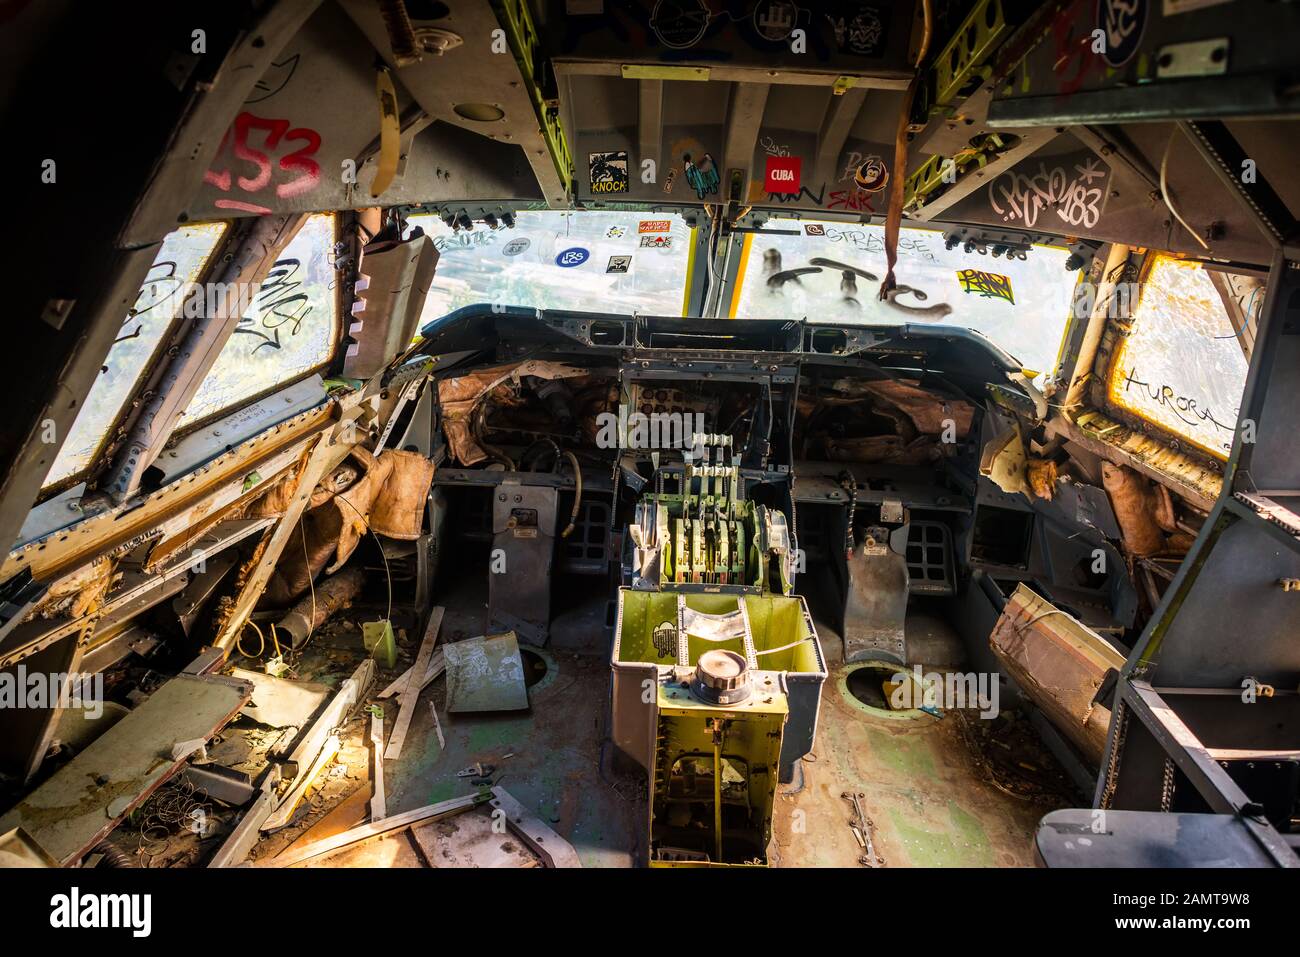 Bangkok/Thailand-06 December 2019: Bangkok airplane graveyard, cockpit detail from indoors of a broken commercial airplane wreckage. Stock Photo